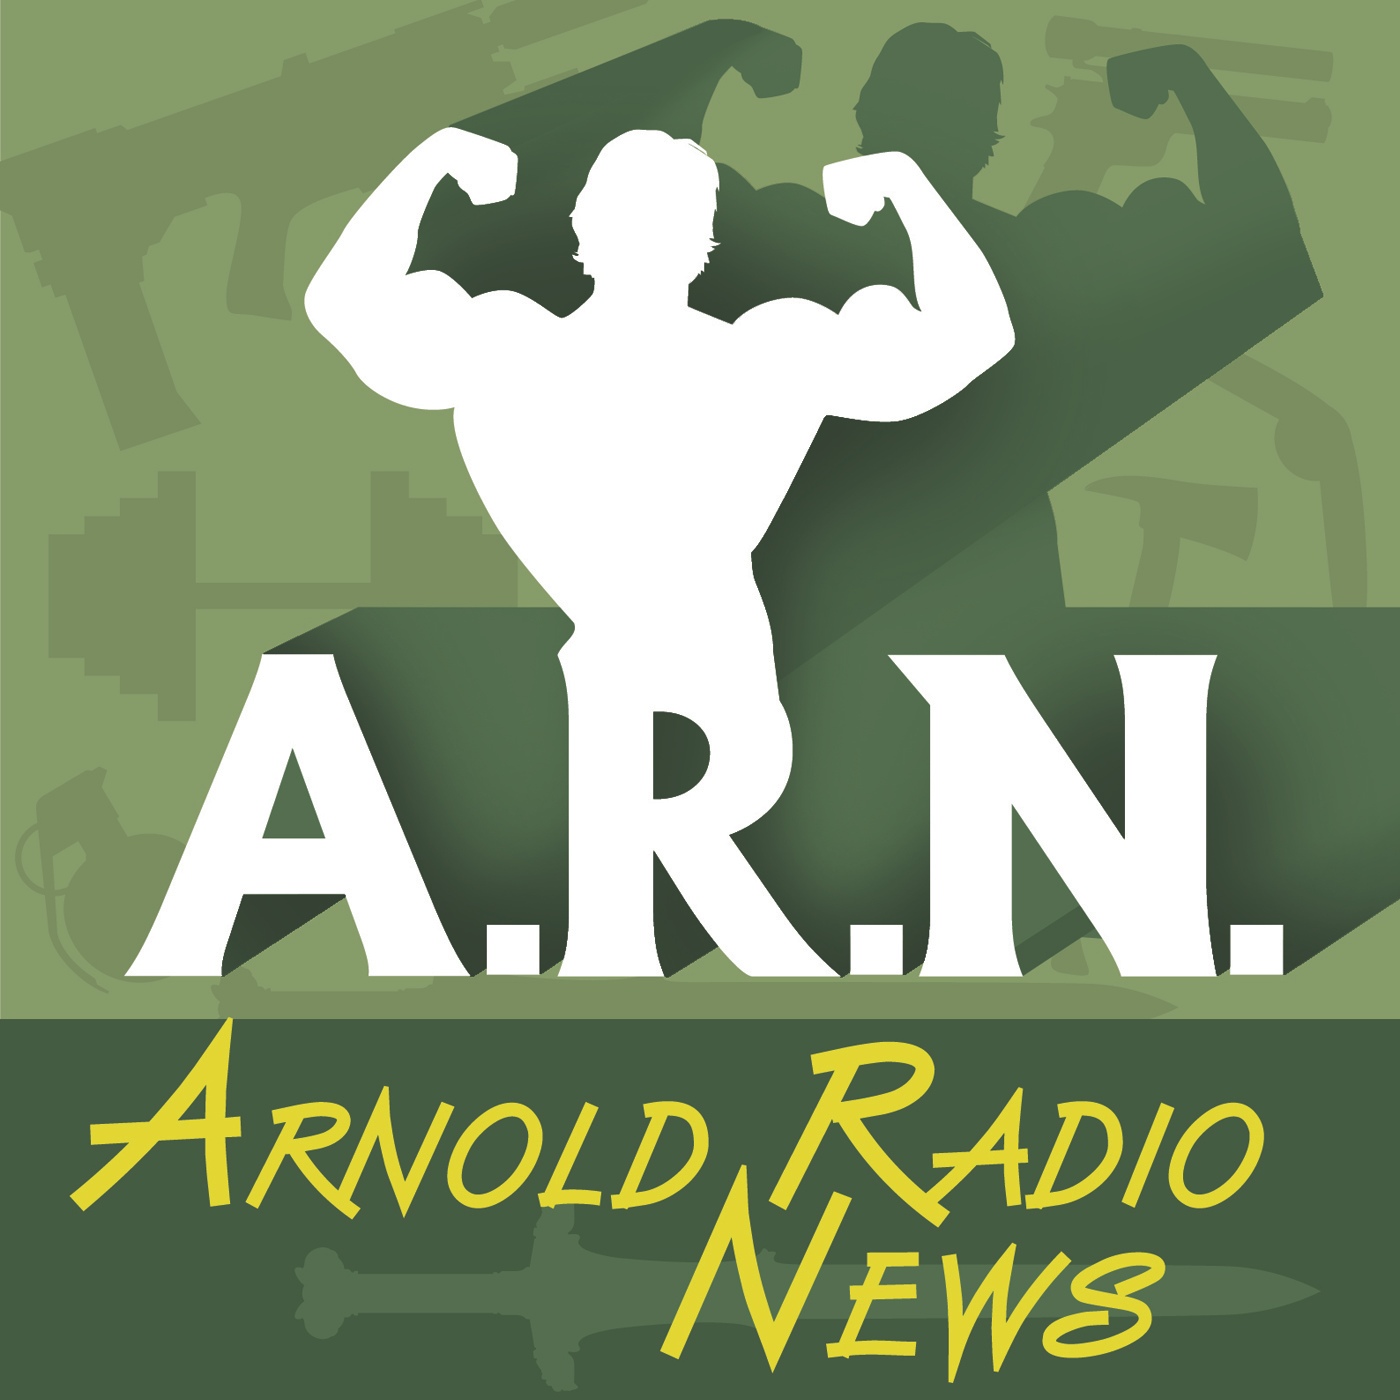 Arnold Radio News